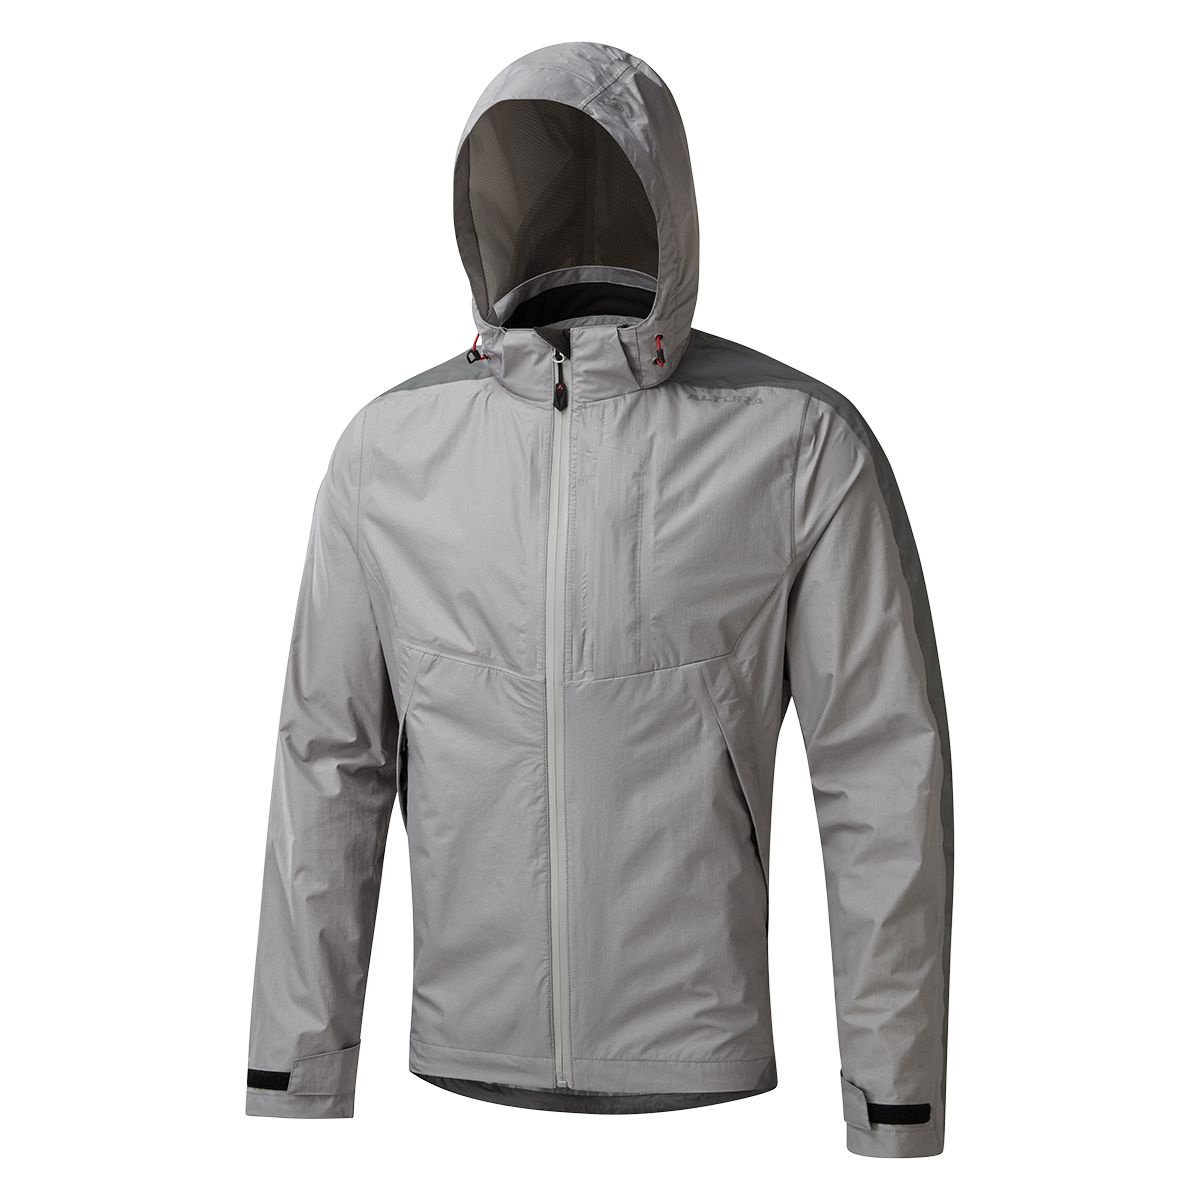 Altura Nightvision Typhoon Waterproof Jacket - £99.99 | Jackets ...